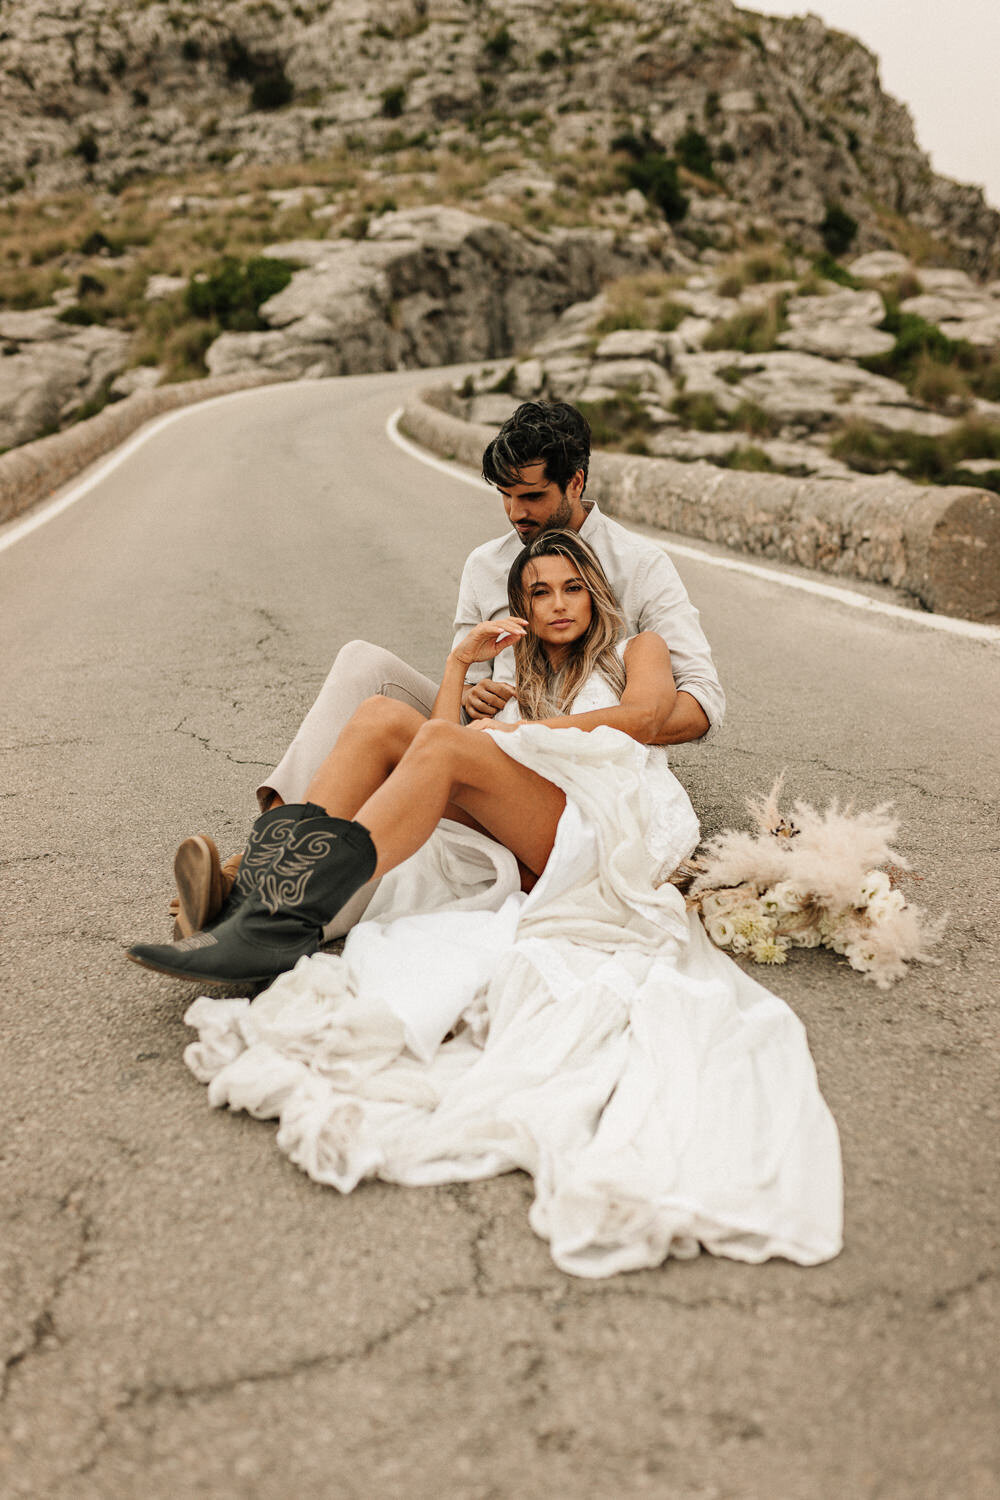 Brautpaar im Tramuntana Gebirge auf Mallorca